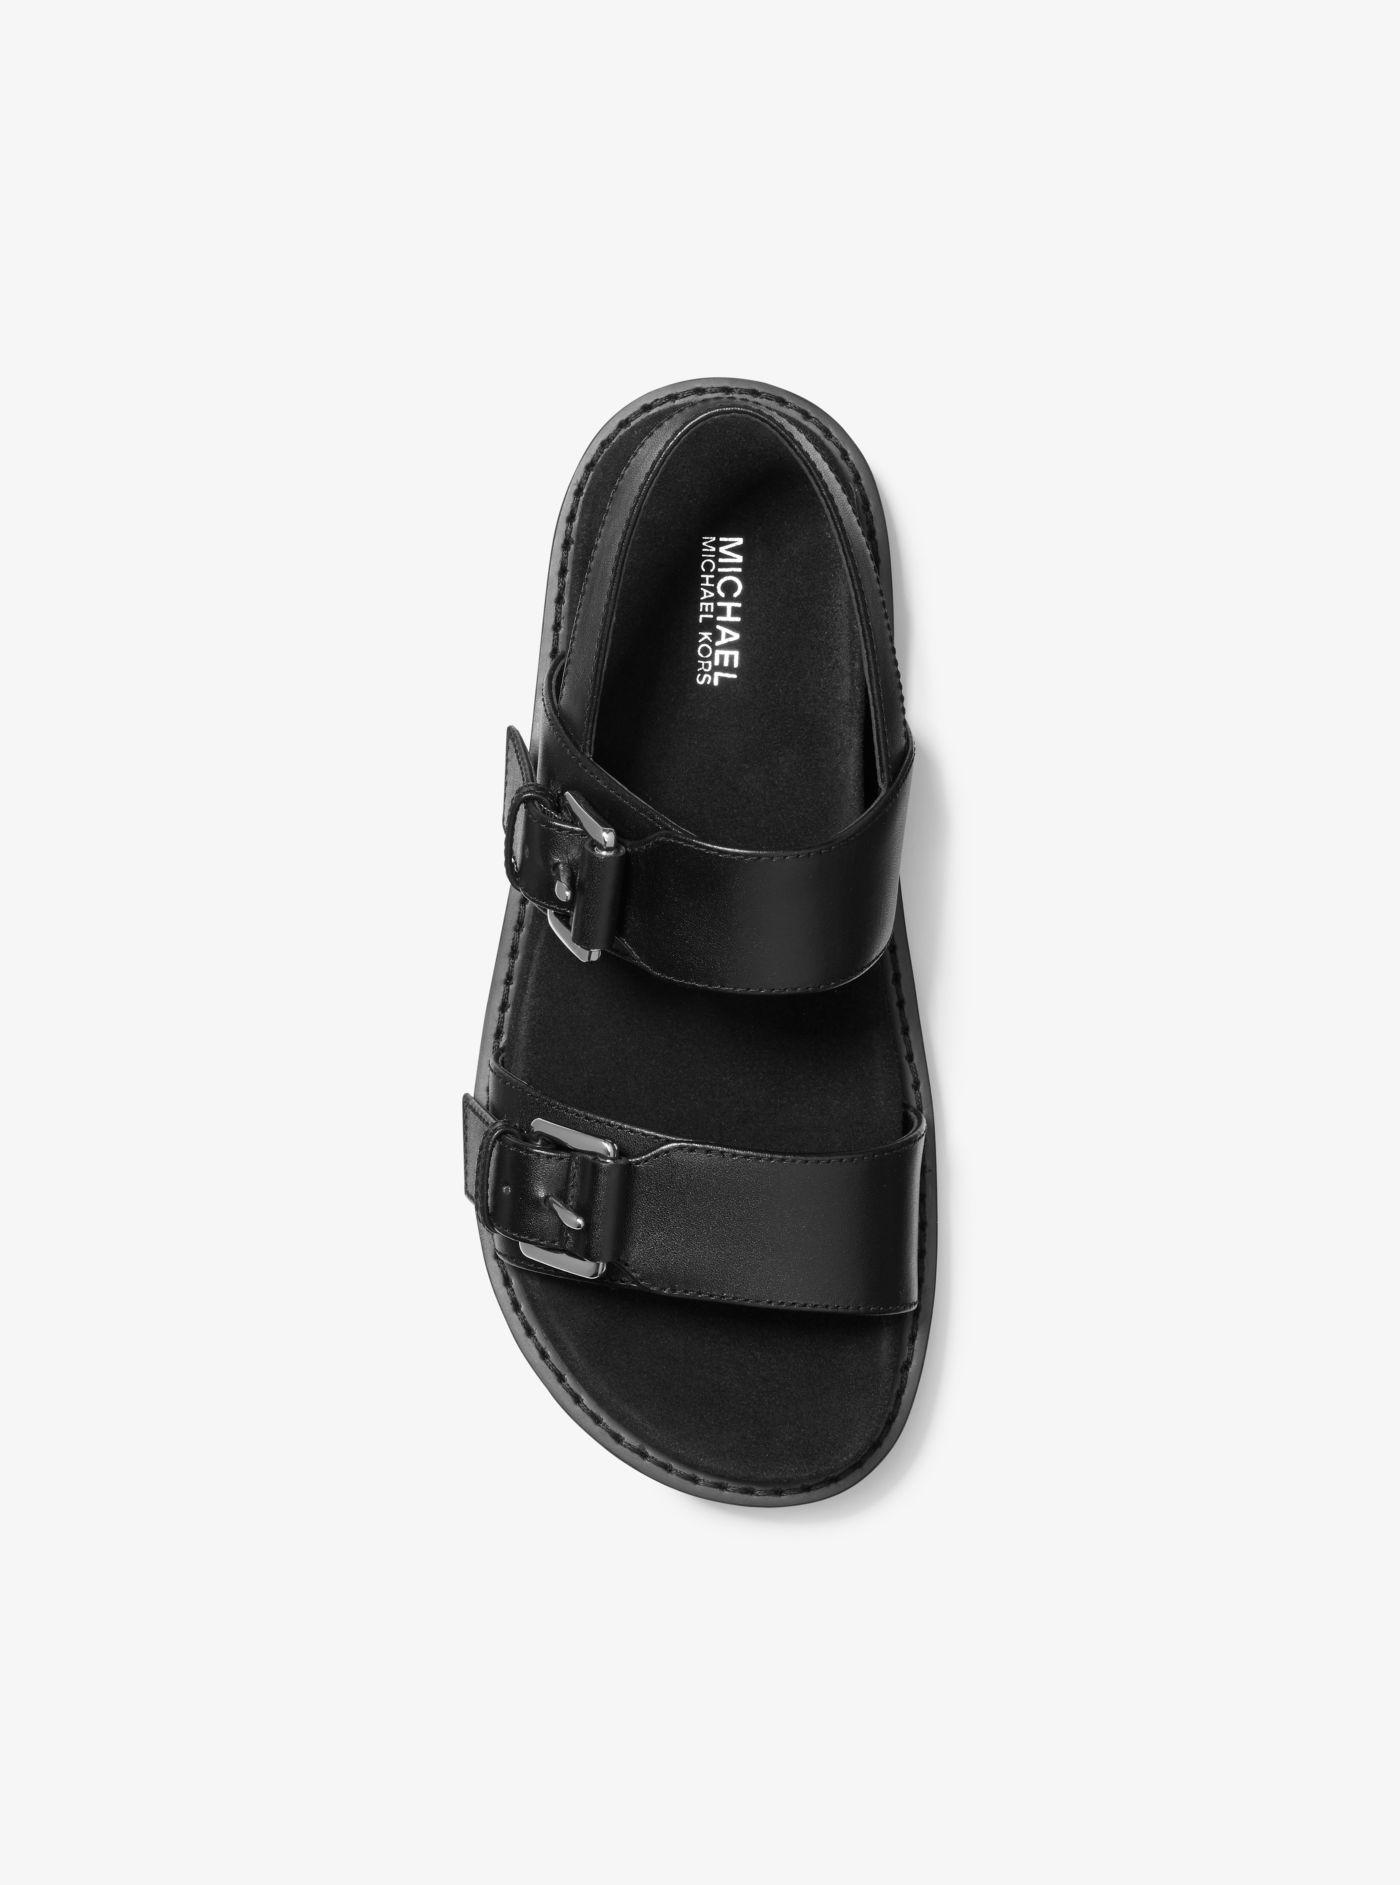 Michael Kors Judd Leather Sandal in Black | Lyst